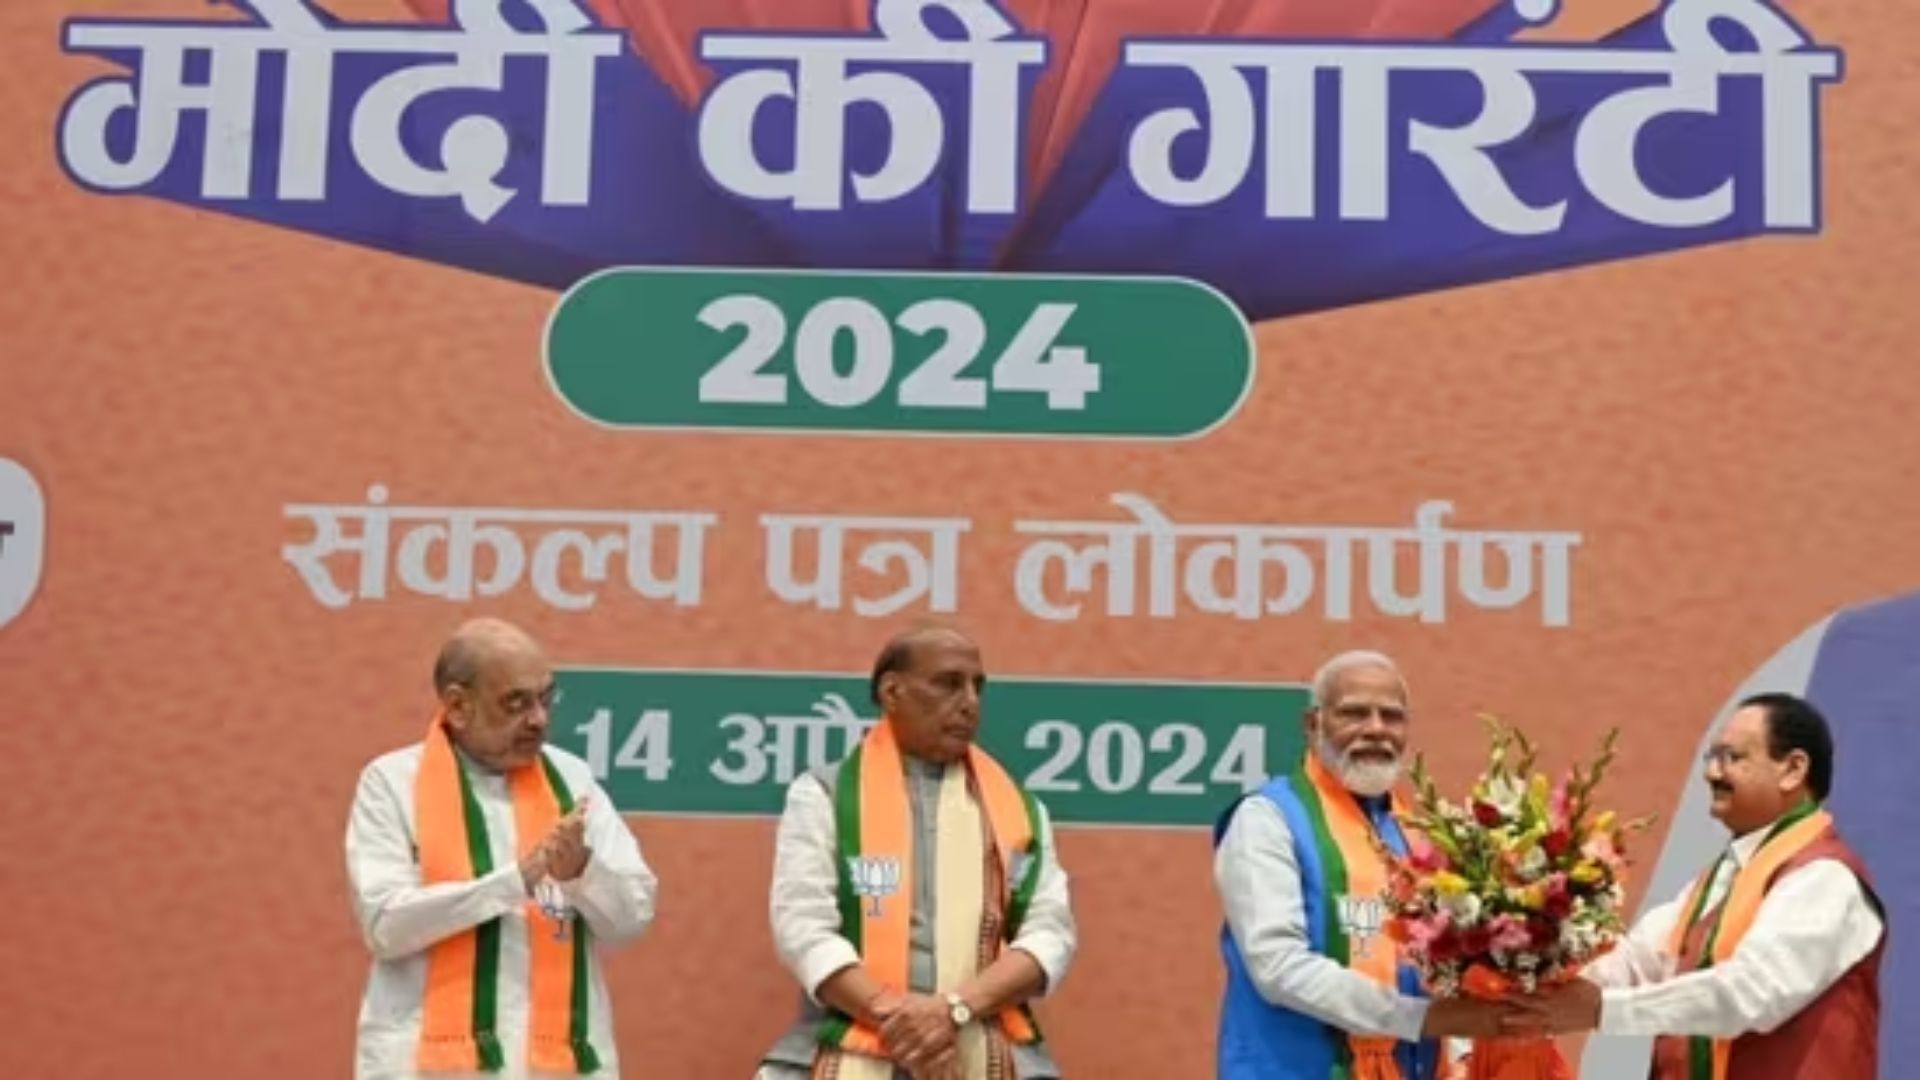 BJP launches its manifesto ‘Sankalap Patra’ for 2024 Lok Sabha polls